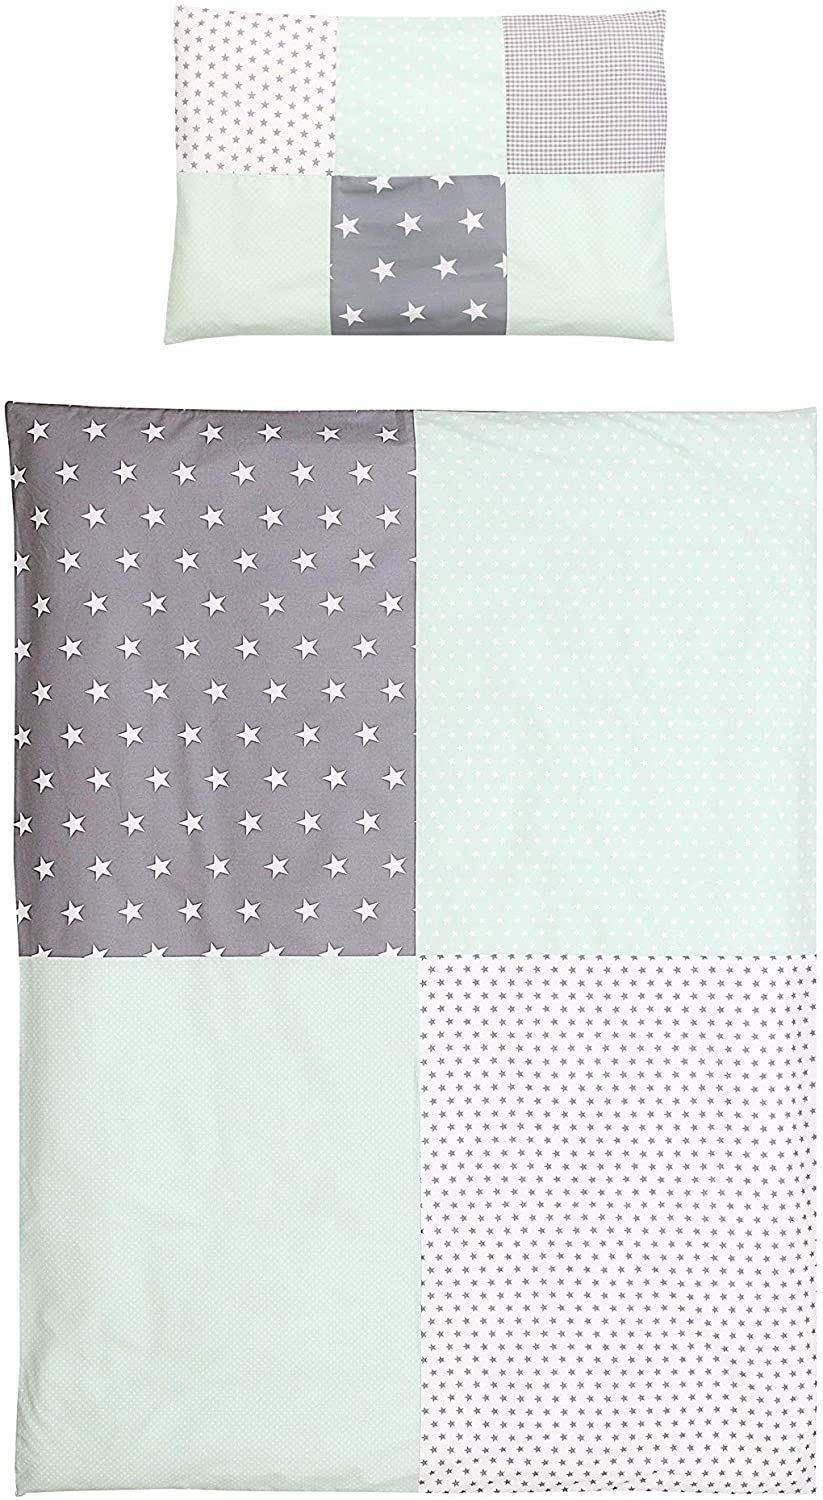 ULLENBOOM ® Children\'s Bed Linen 100 x 135 cm Mint Grey (Made in the EU) - Pillowcase (40 x 60 cm) and Duvet Cover (100 x 135 cm) - Children\'s & Baby Bedding Cotton Patchwork Design